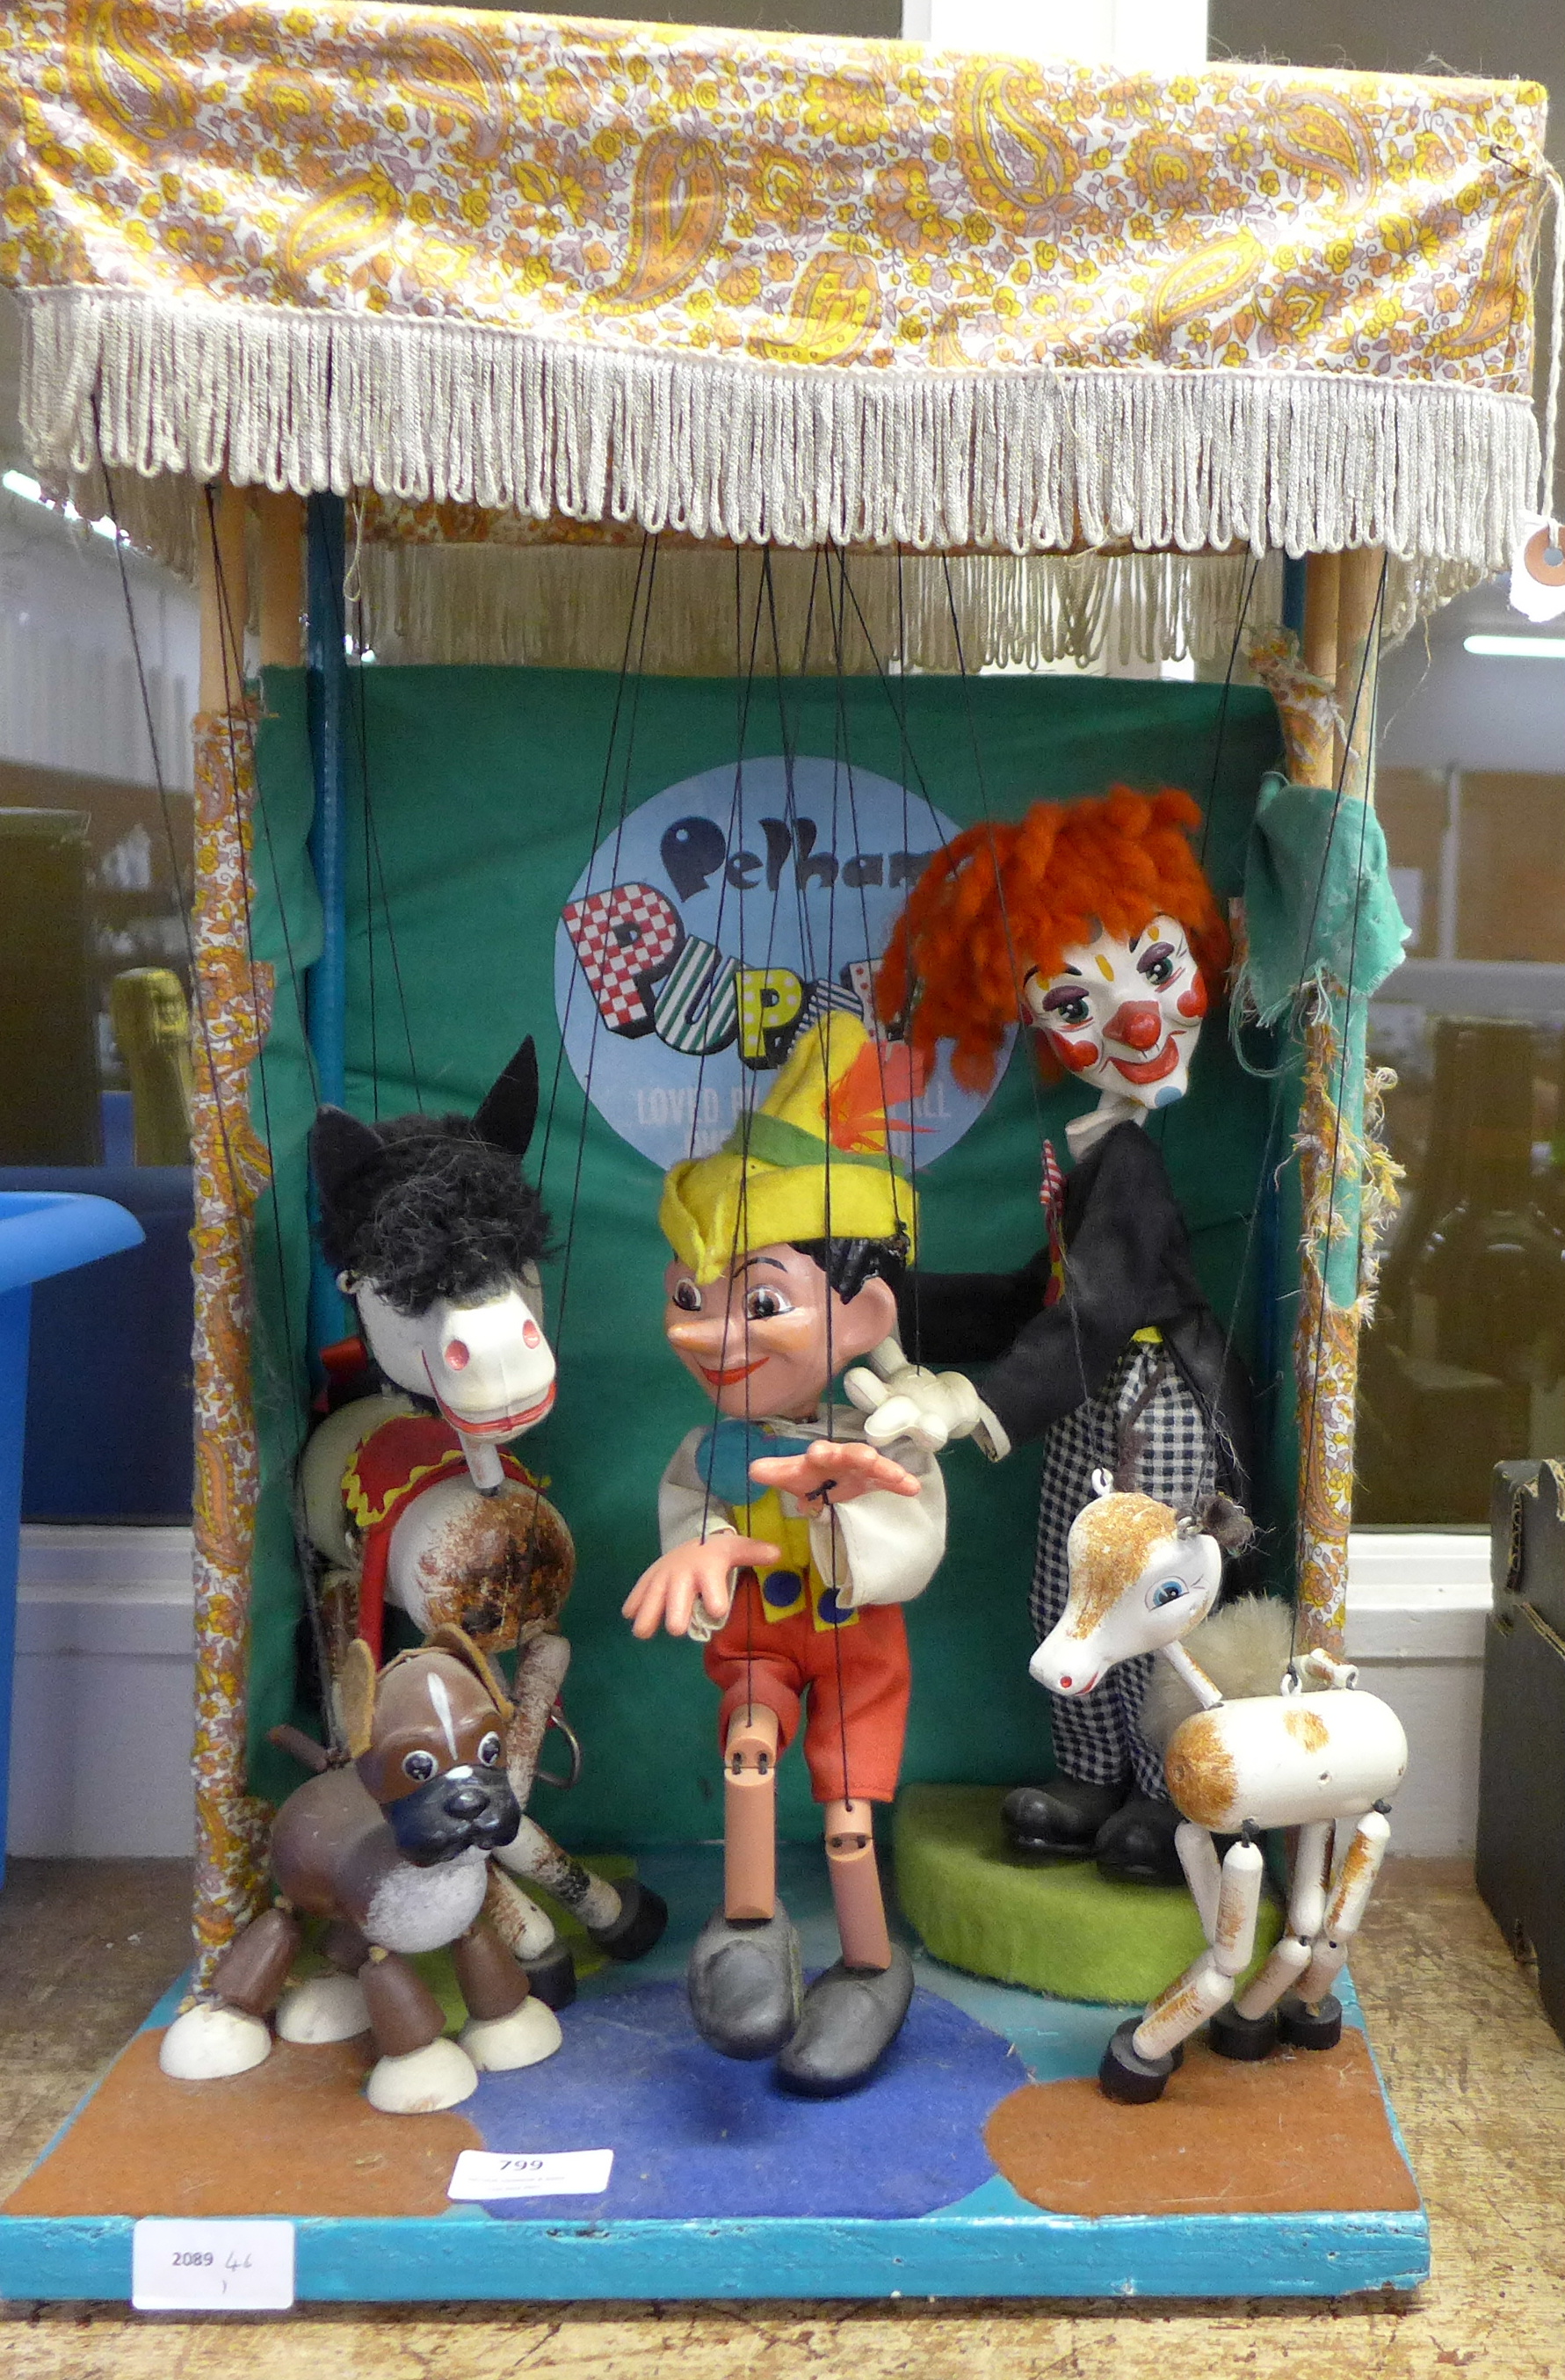 A Pelham Puppet theatre display with five Pelham puppets